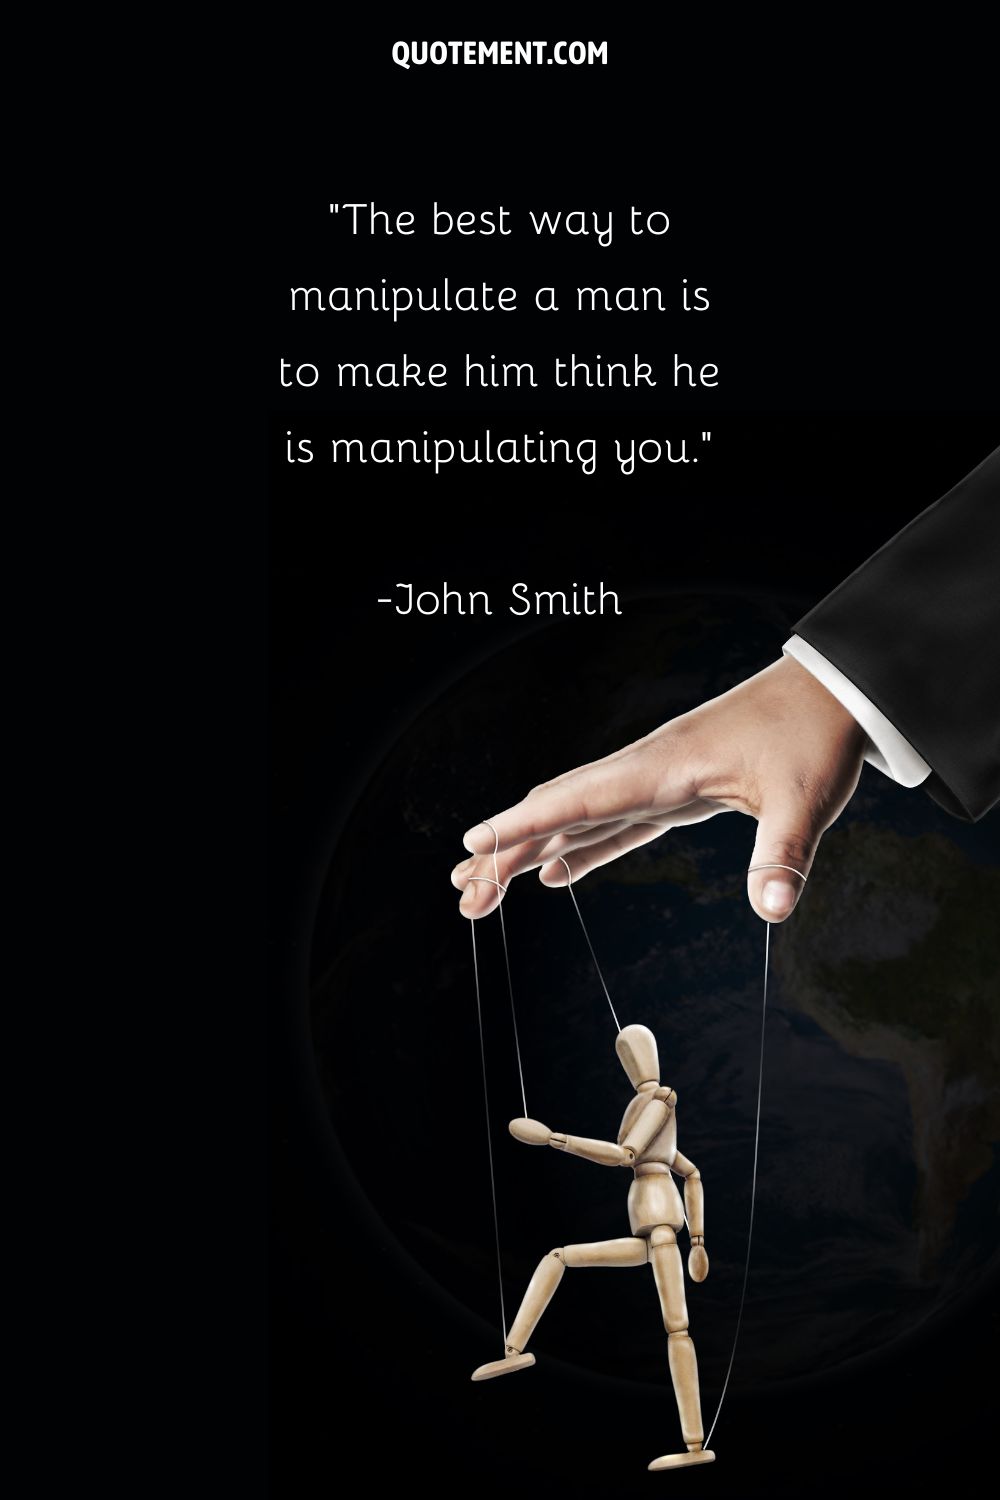 string puppet illustration representing manipulation quote